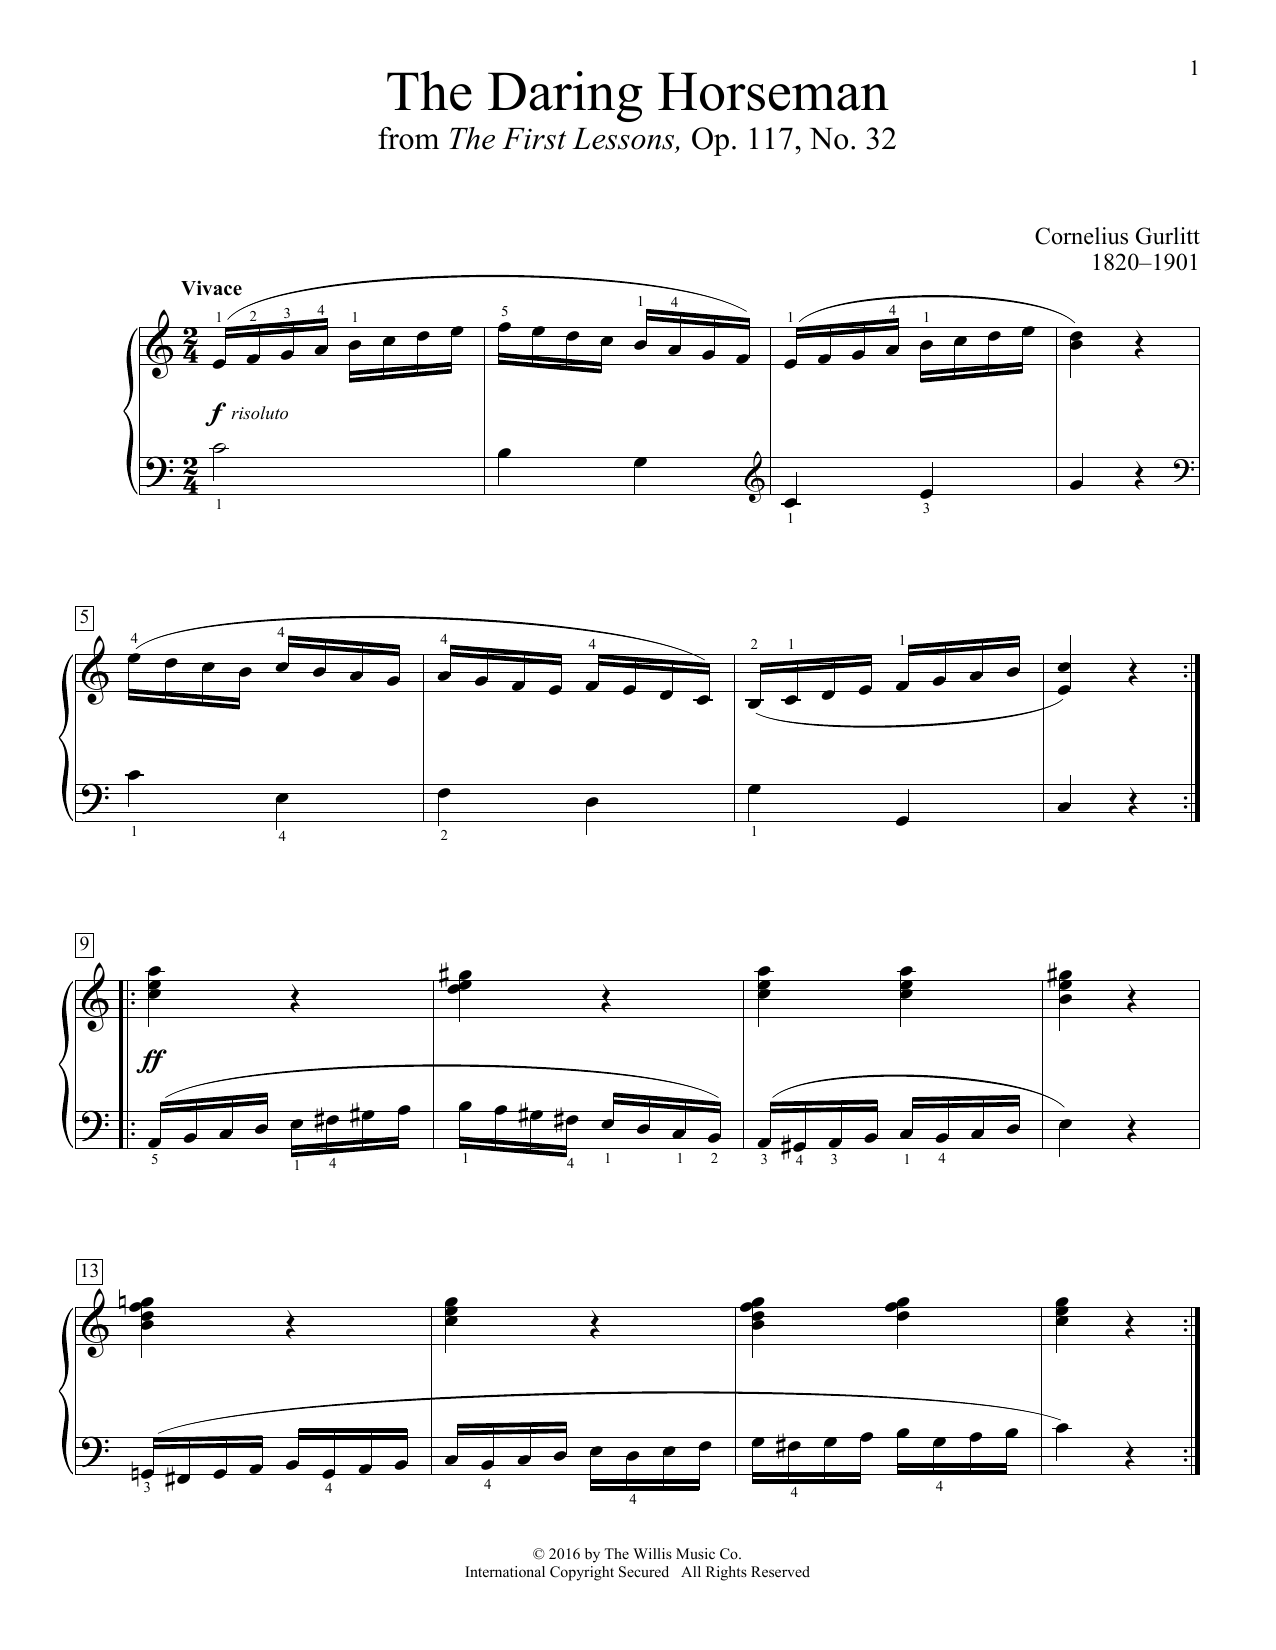 Download Cornelius Gurlitt The Daring Horseman Sheet Music and learn how to play Educational Piano PDF digital score in minutes